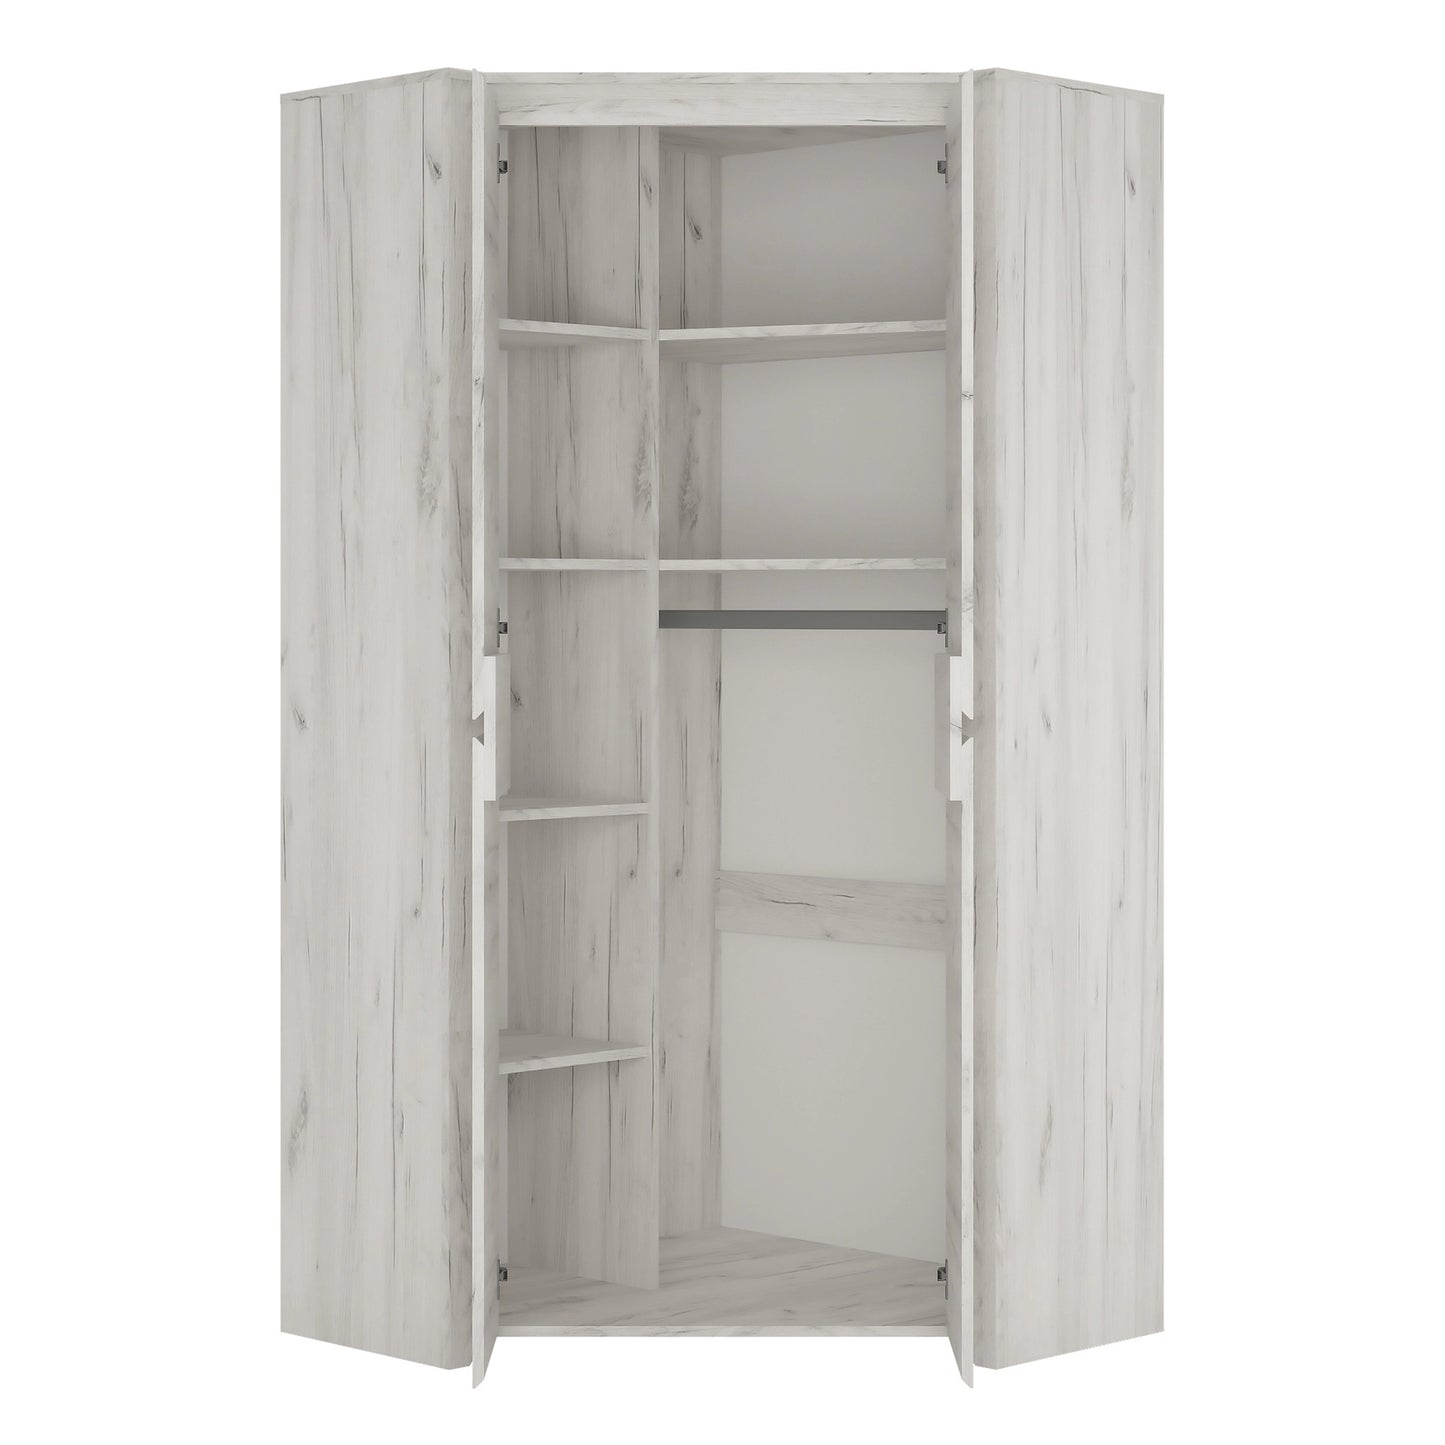 Furniture To Go Angel Corner Fitted Wardrobe in White Craft Oak